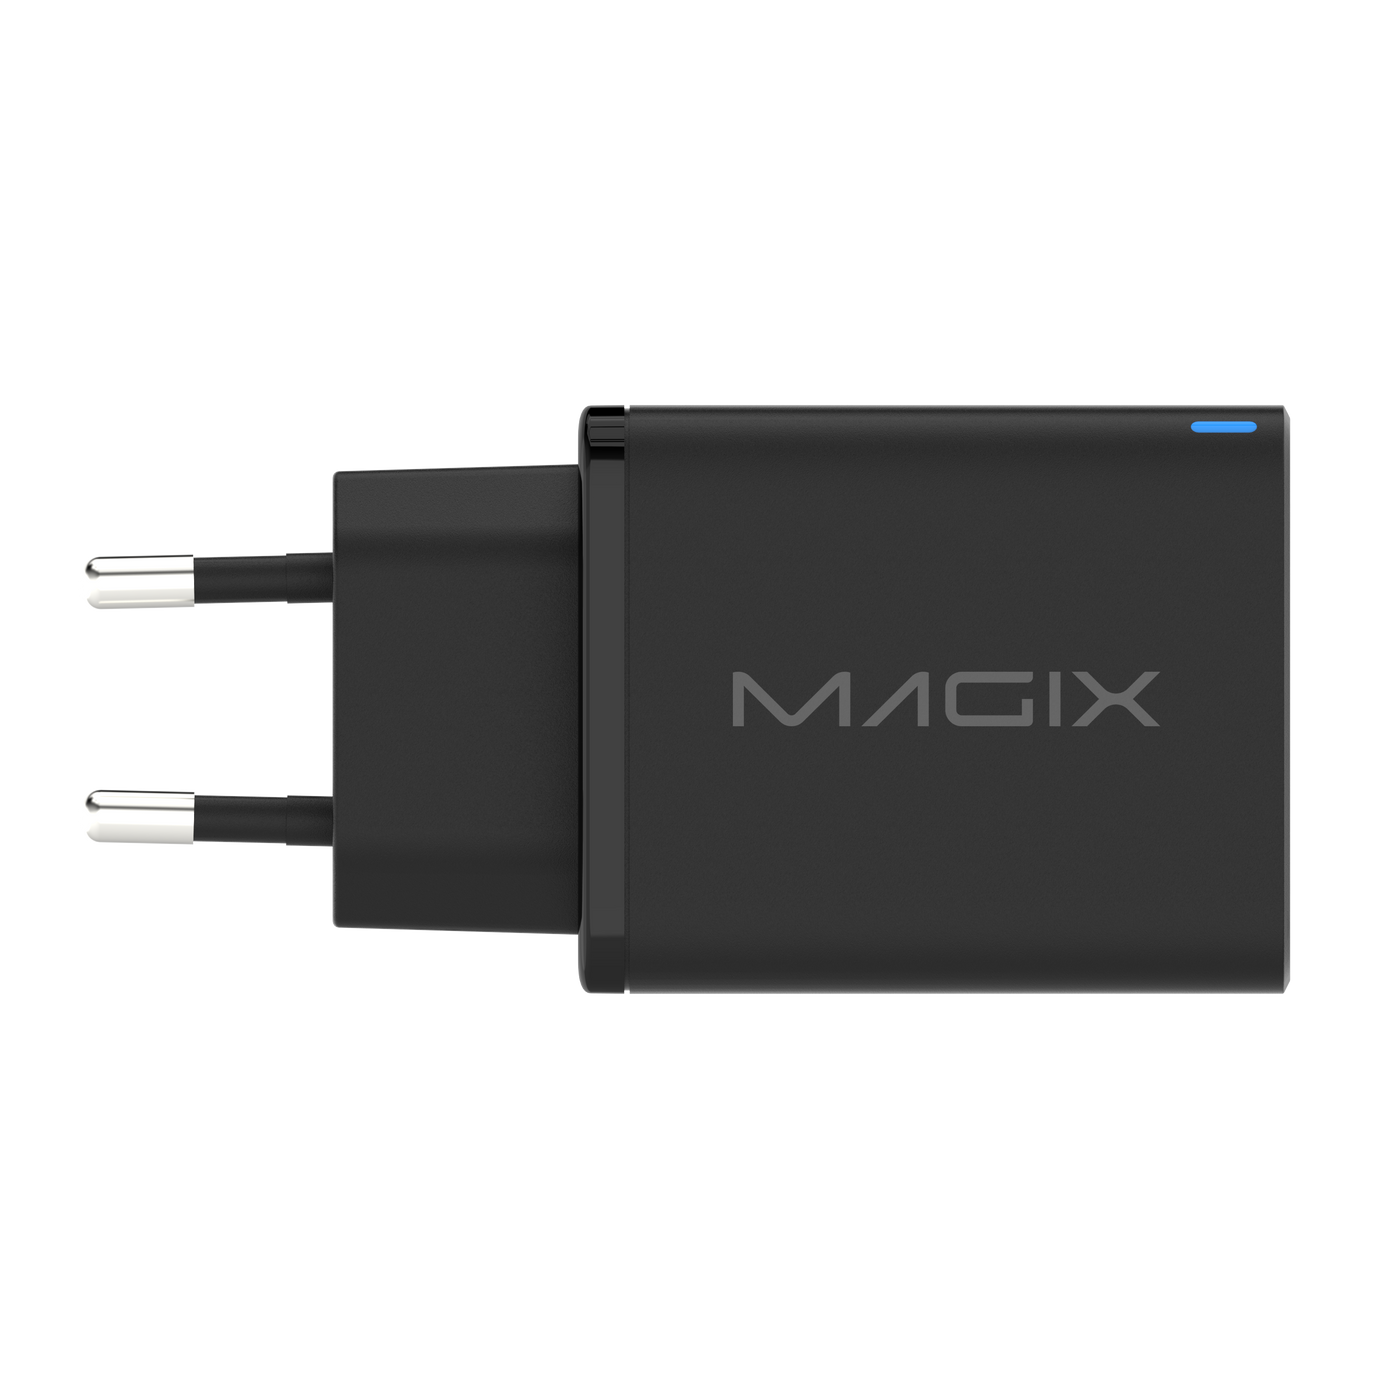 MAGIX 65W 3-Port Plug GaN Charger PD Power Delivery - EUR Plug